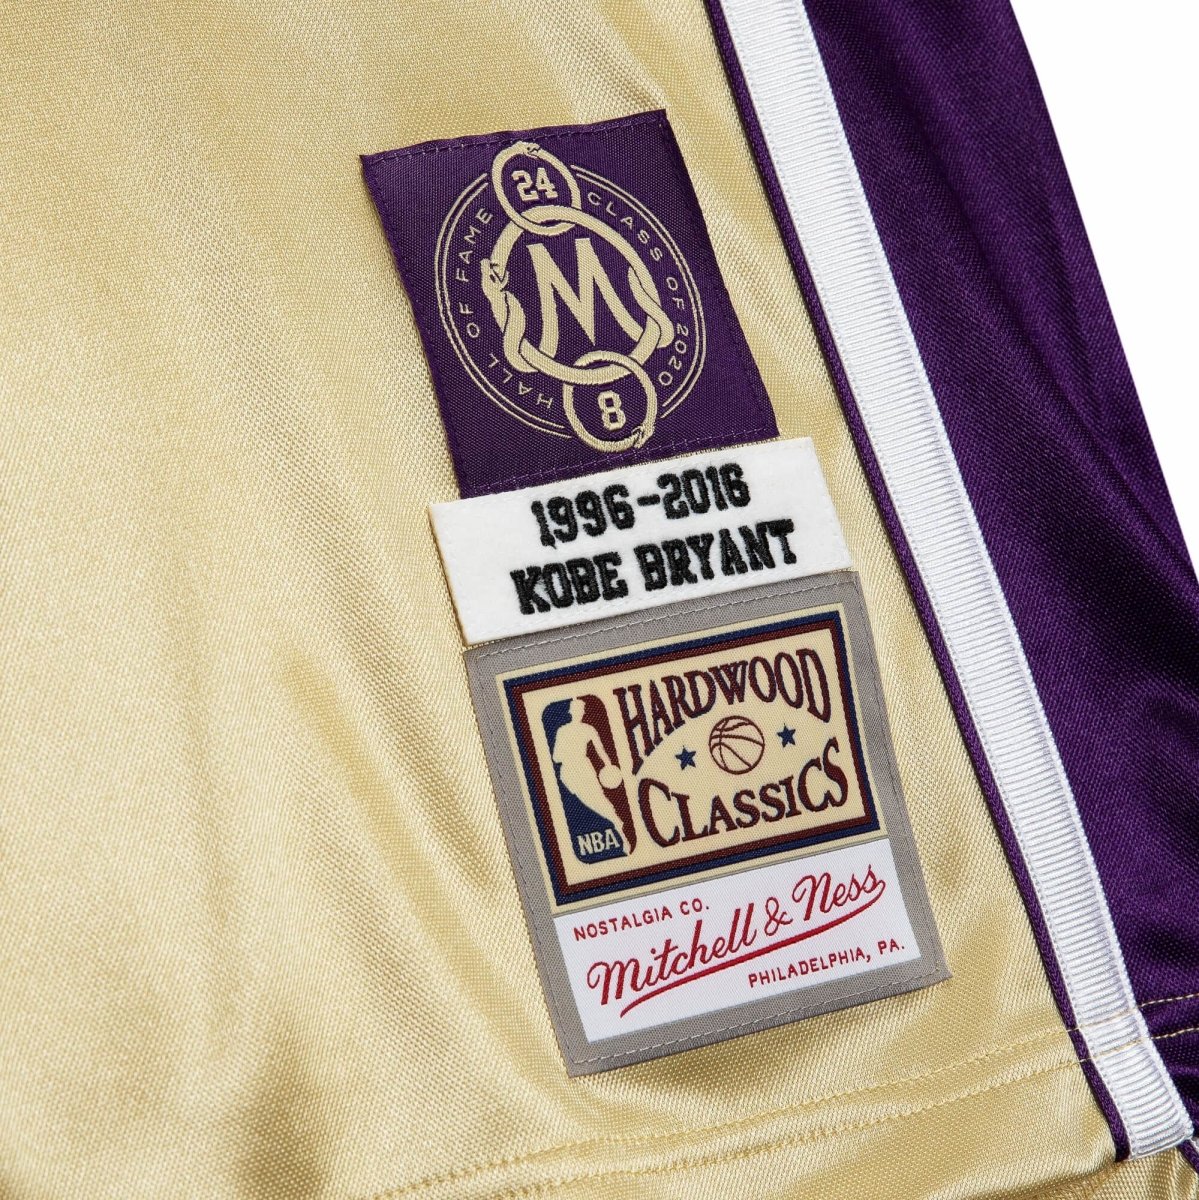 100% Authentic Kobe Bryant Mitchell Ness 1996-2016 HOF Lakers